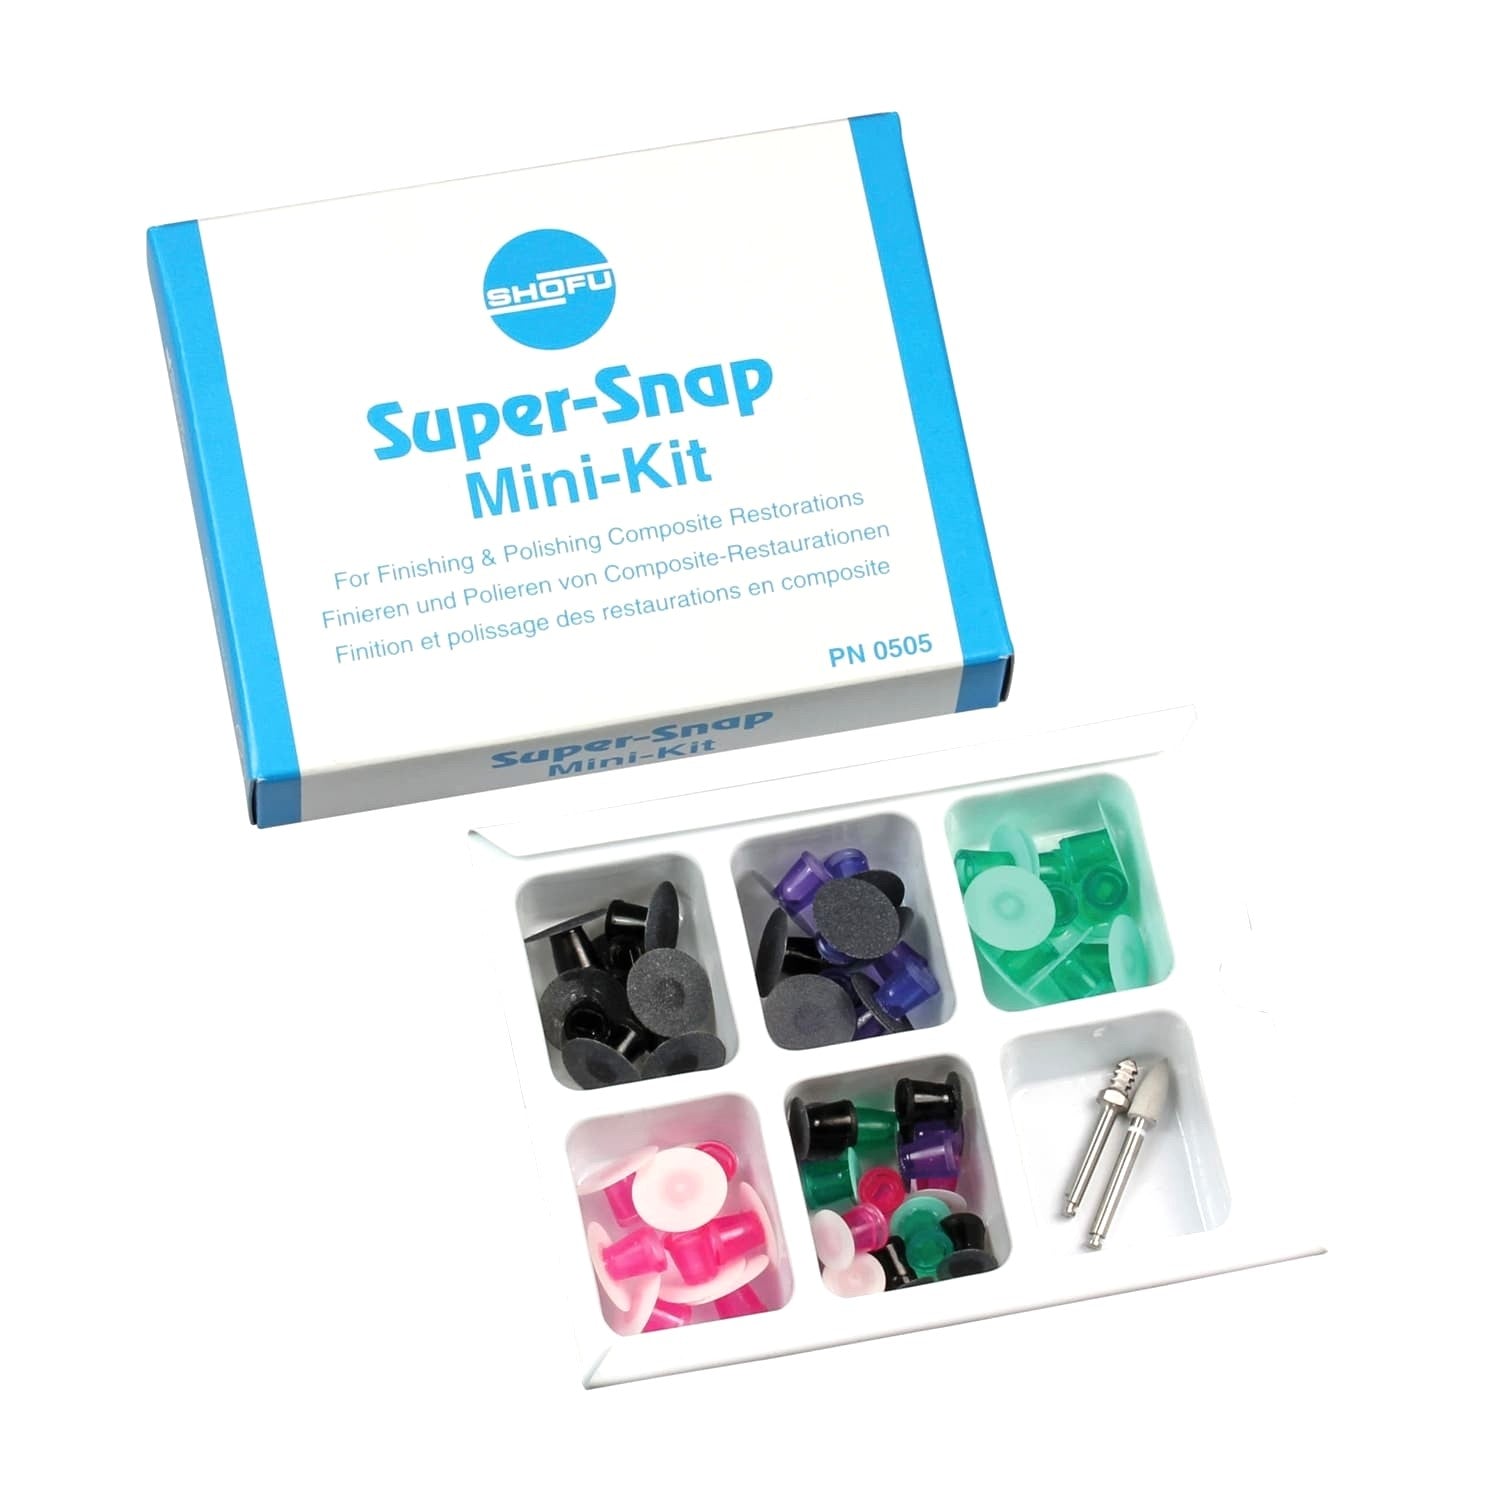 Kulzer Charisma Smart Composite 4x4 Syringe Kit + Super Snap Mini Kit